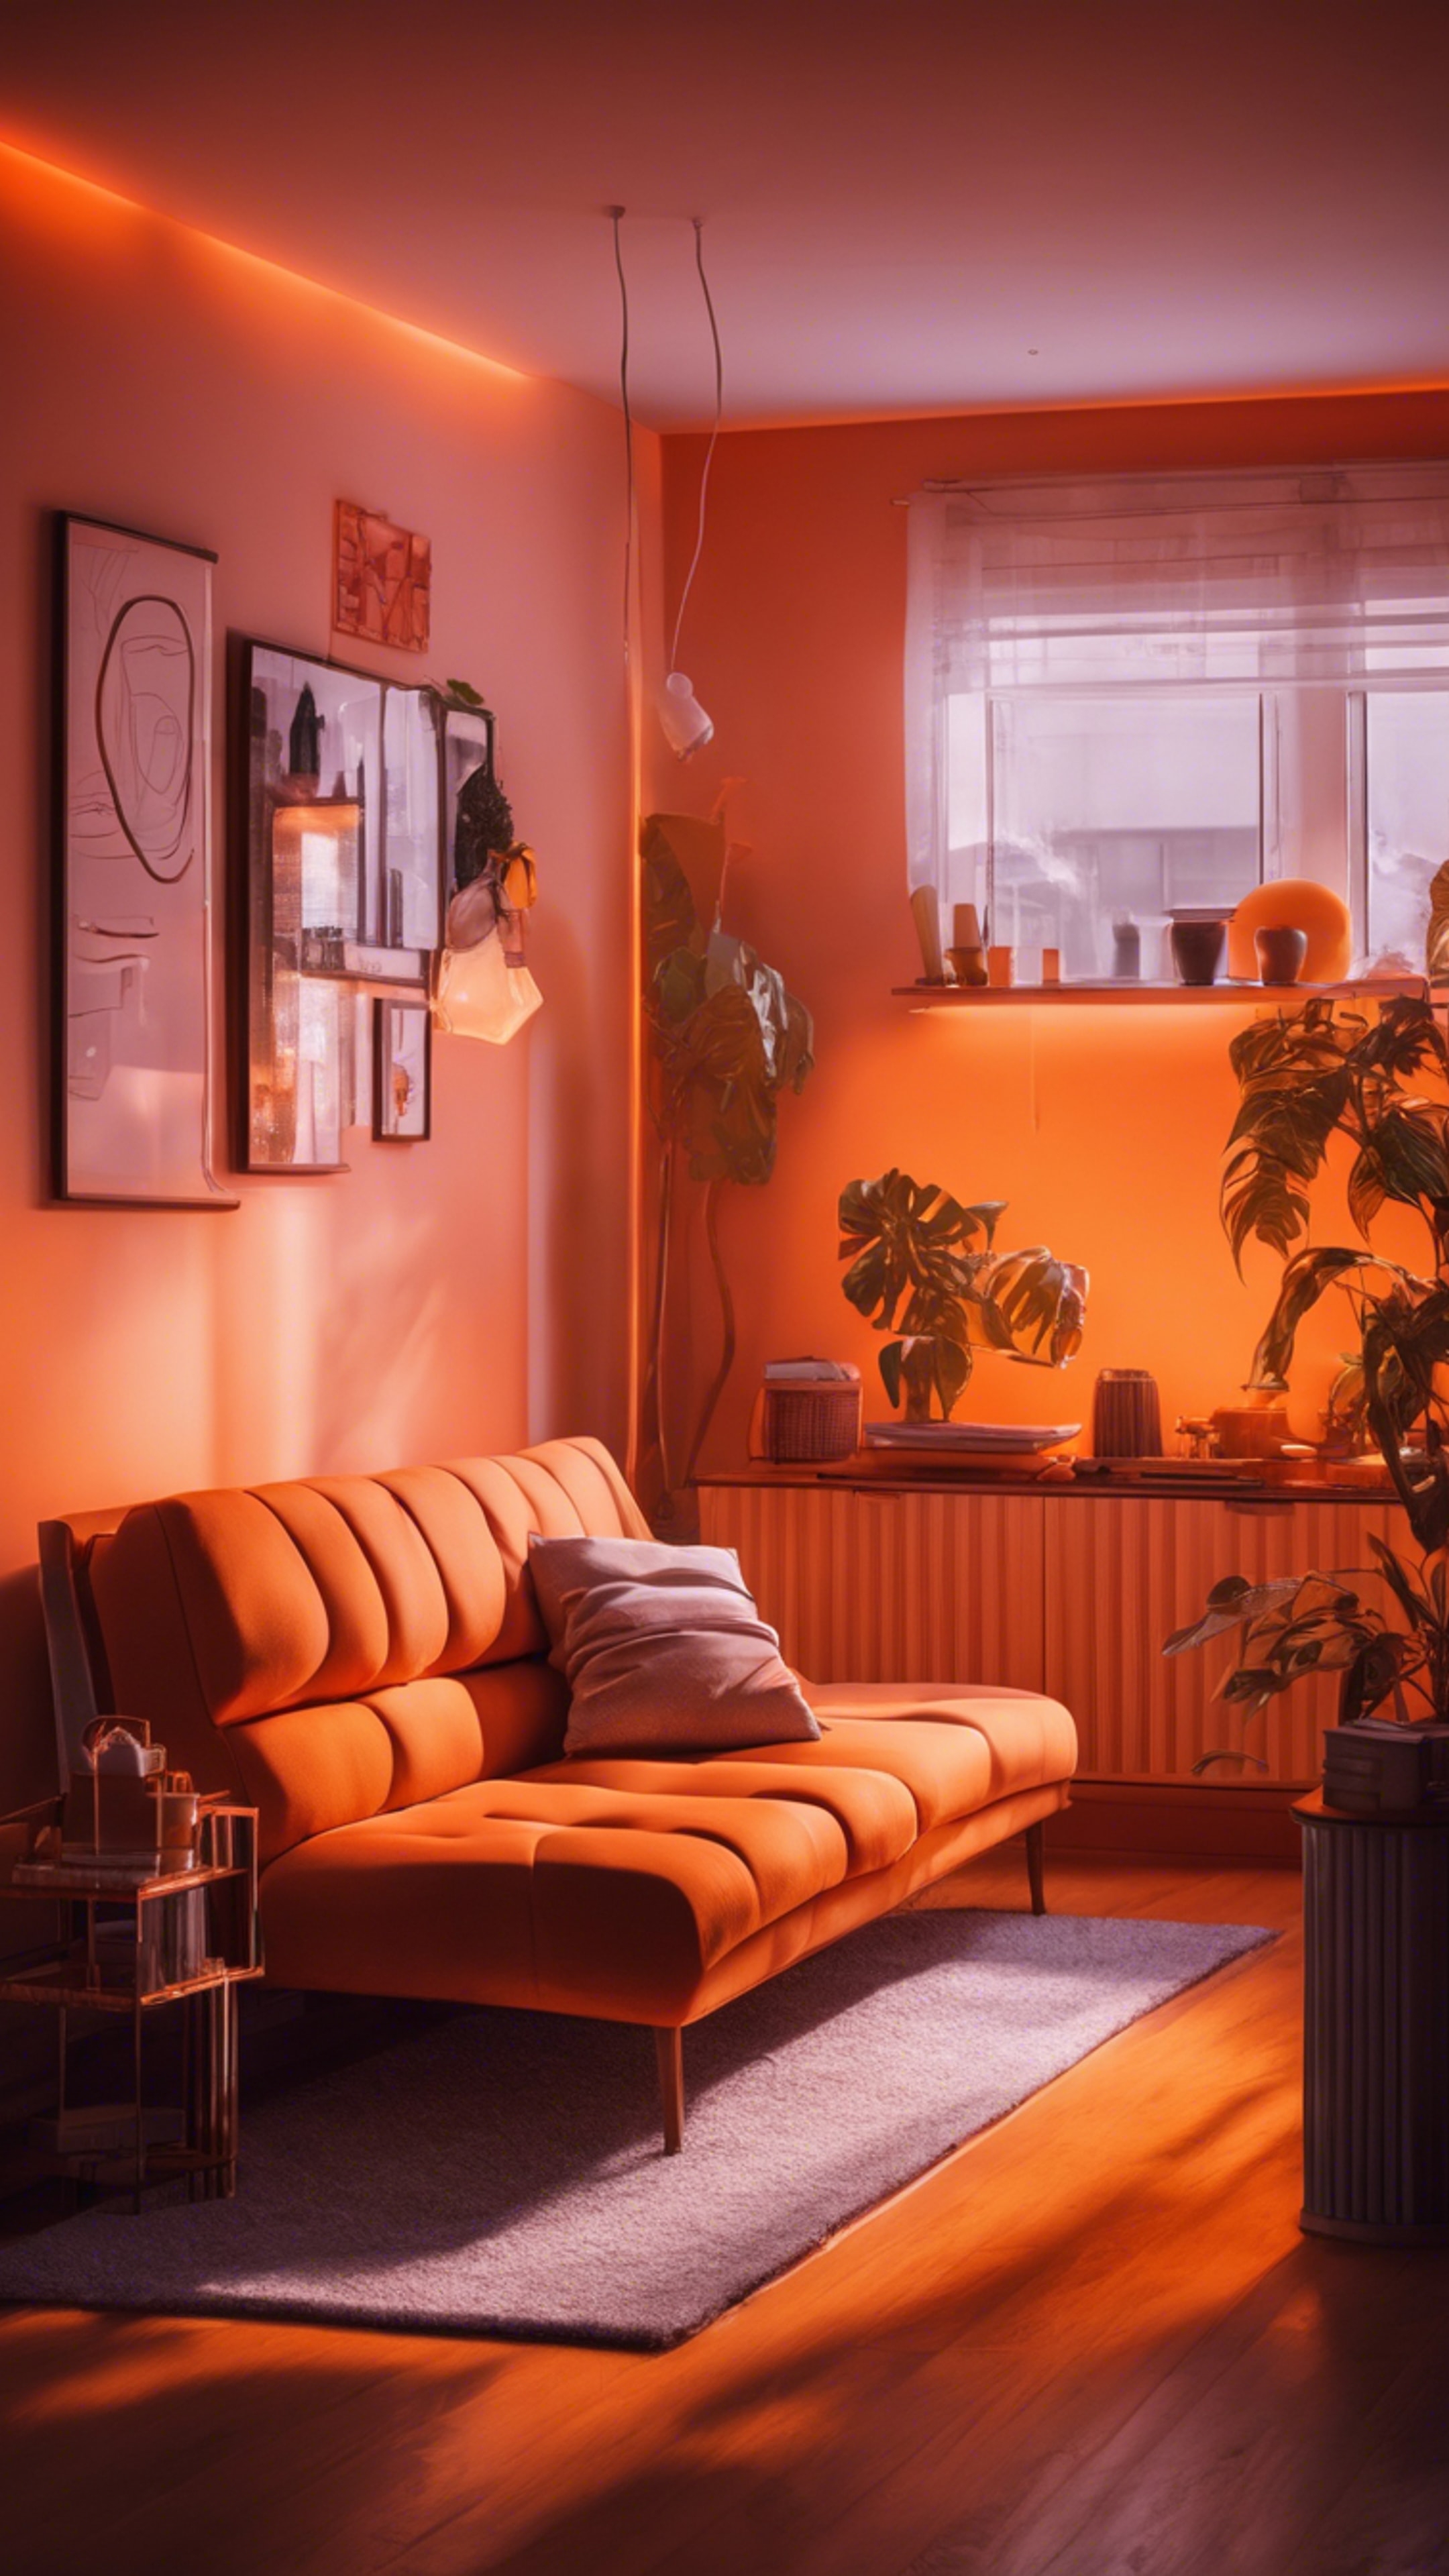 A fresh orange living room with trendy neon lights casting beautiful shadows. Tapeta[39213640e9864c1aa0c4]